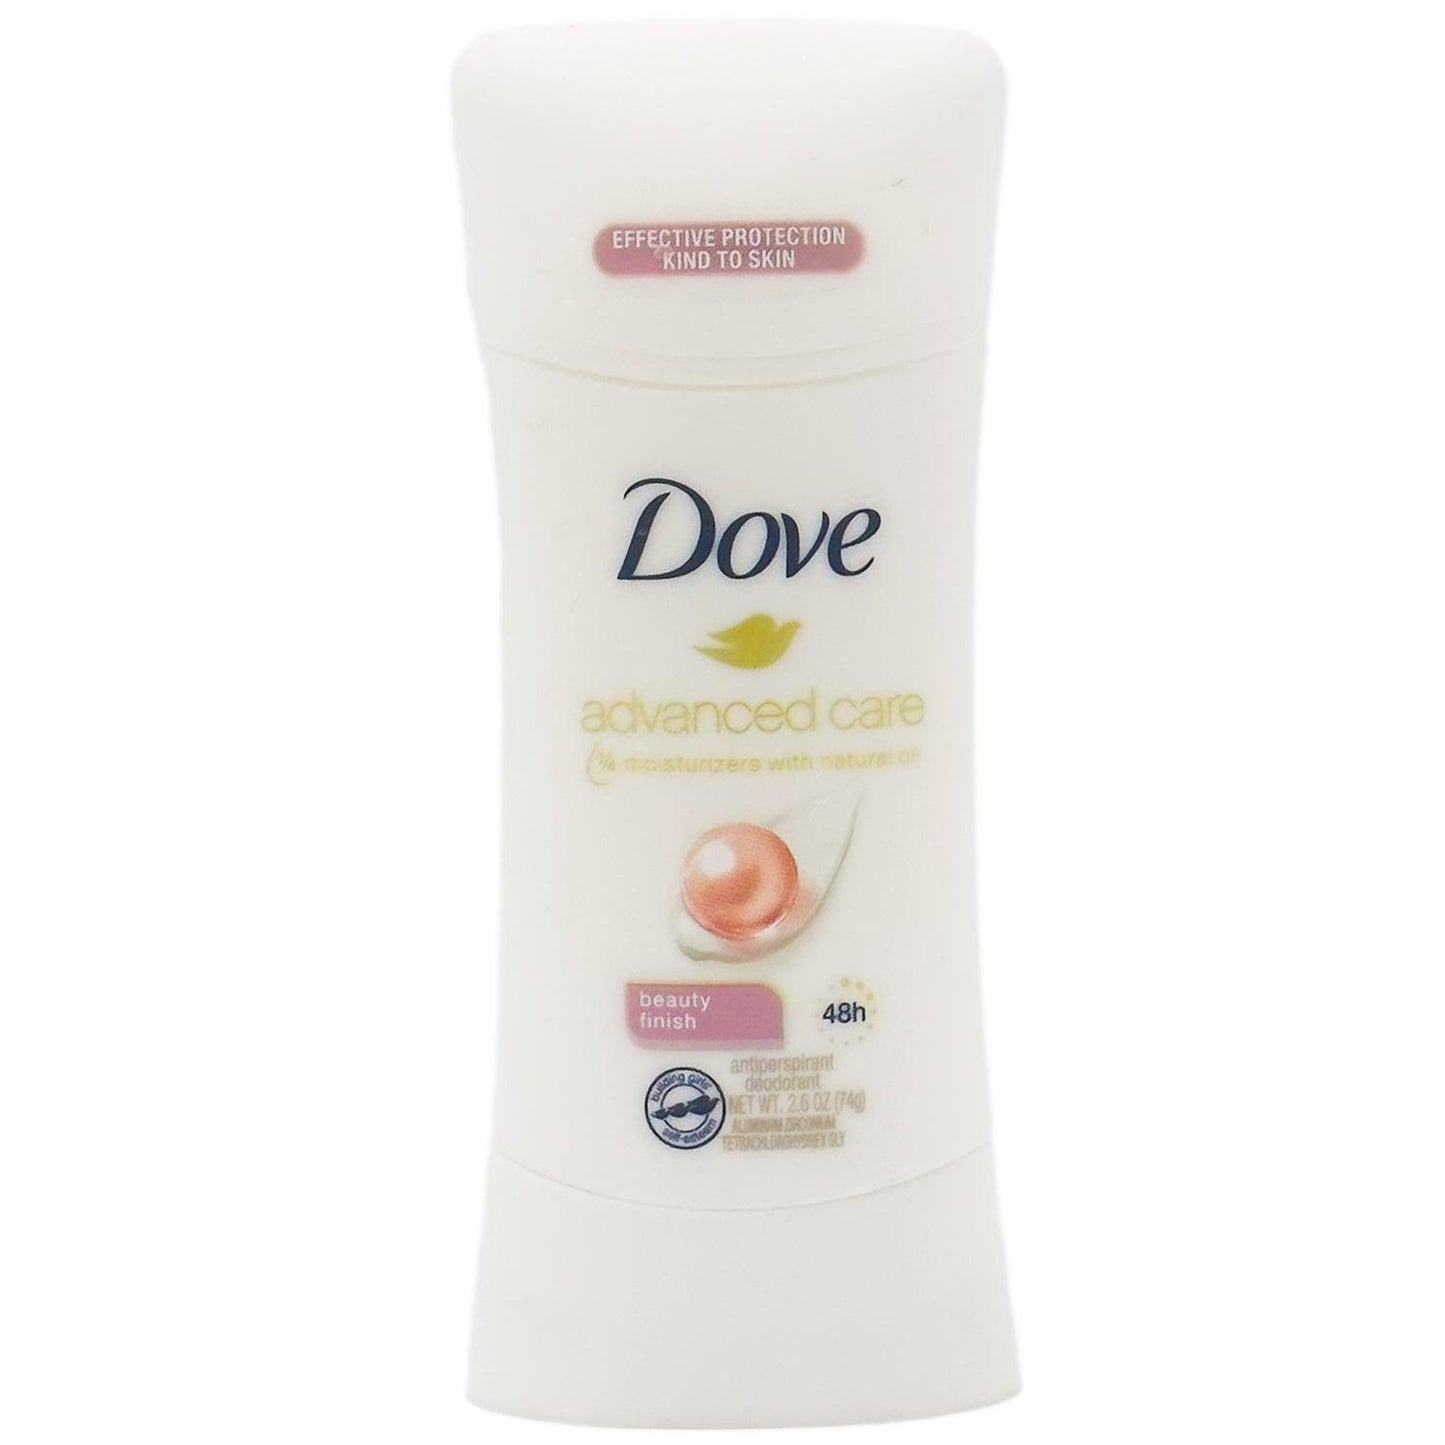 dove | beauty finish antiperspirant 48hr | 2.6 oz | BEST BY 01/23 - Home Revival Shop